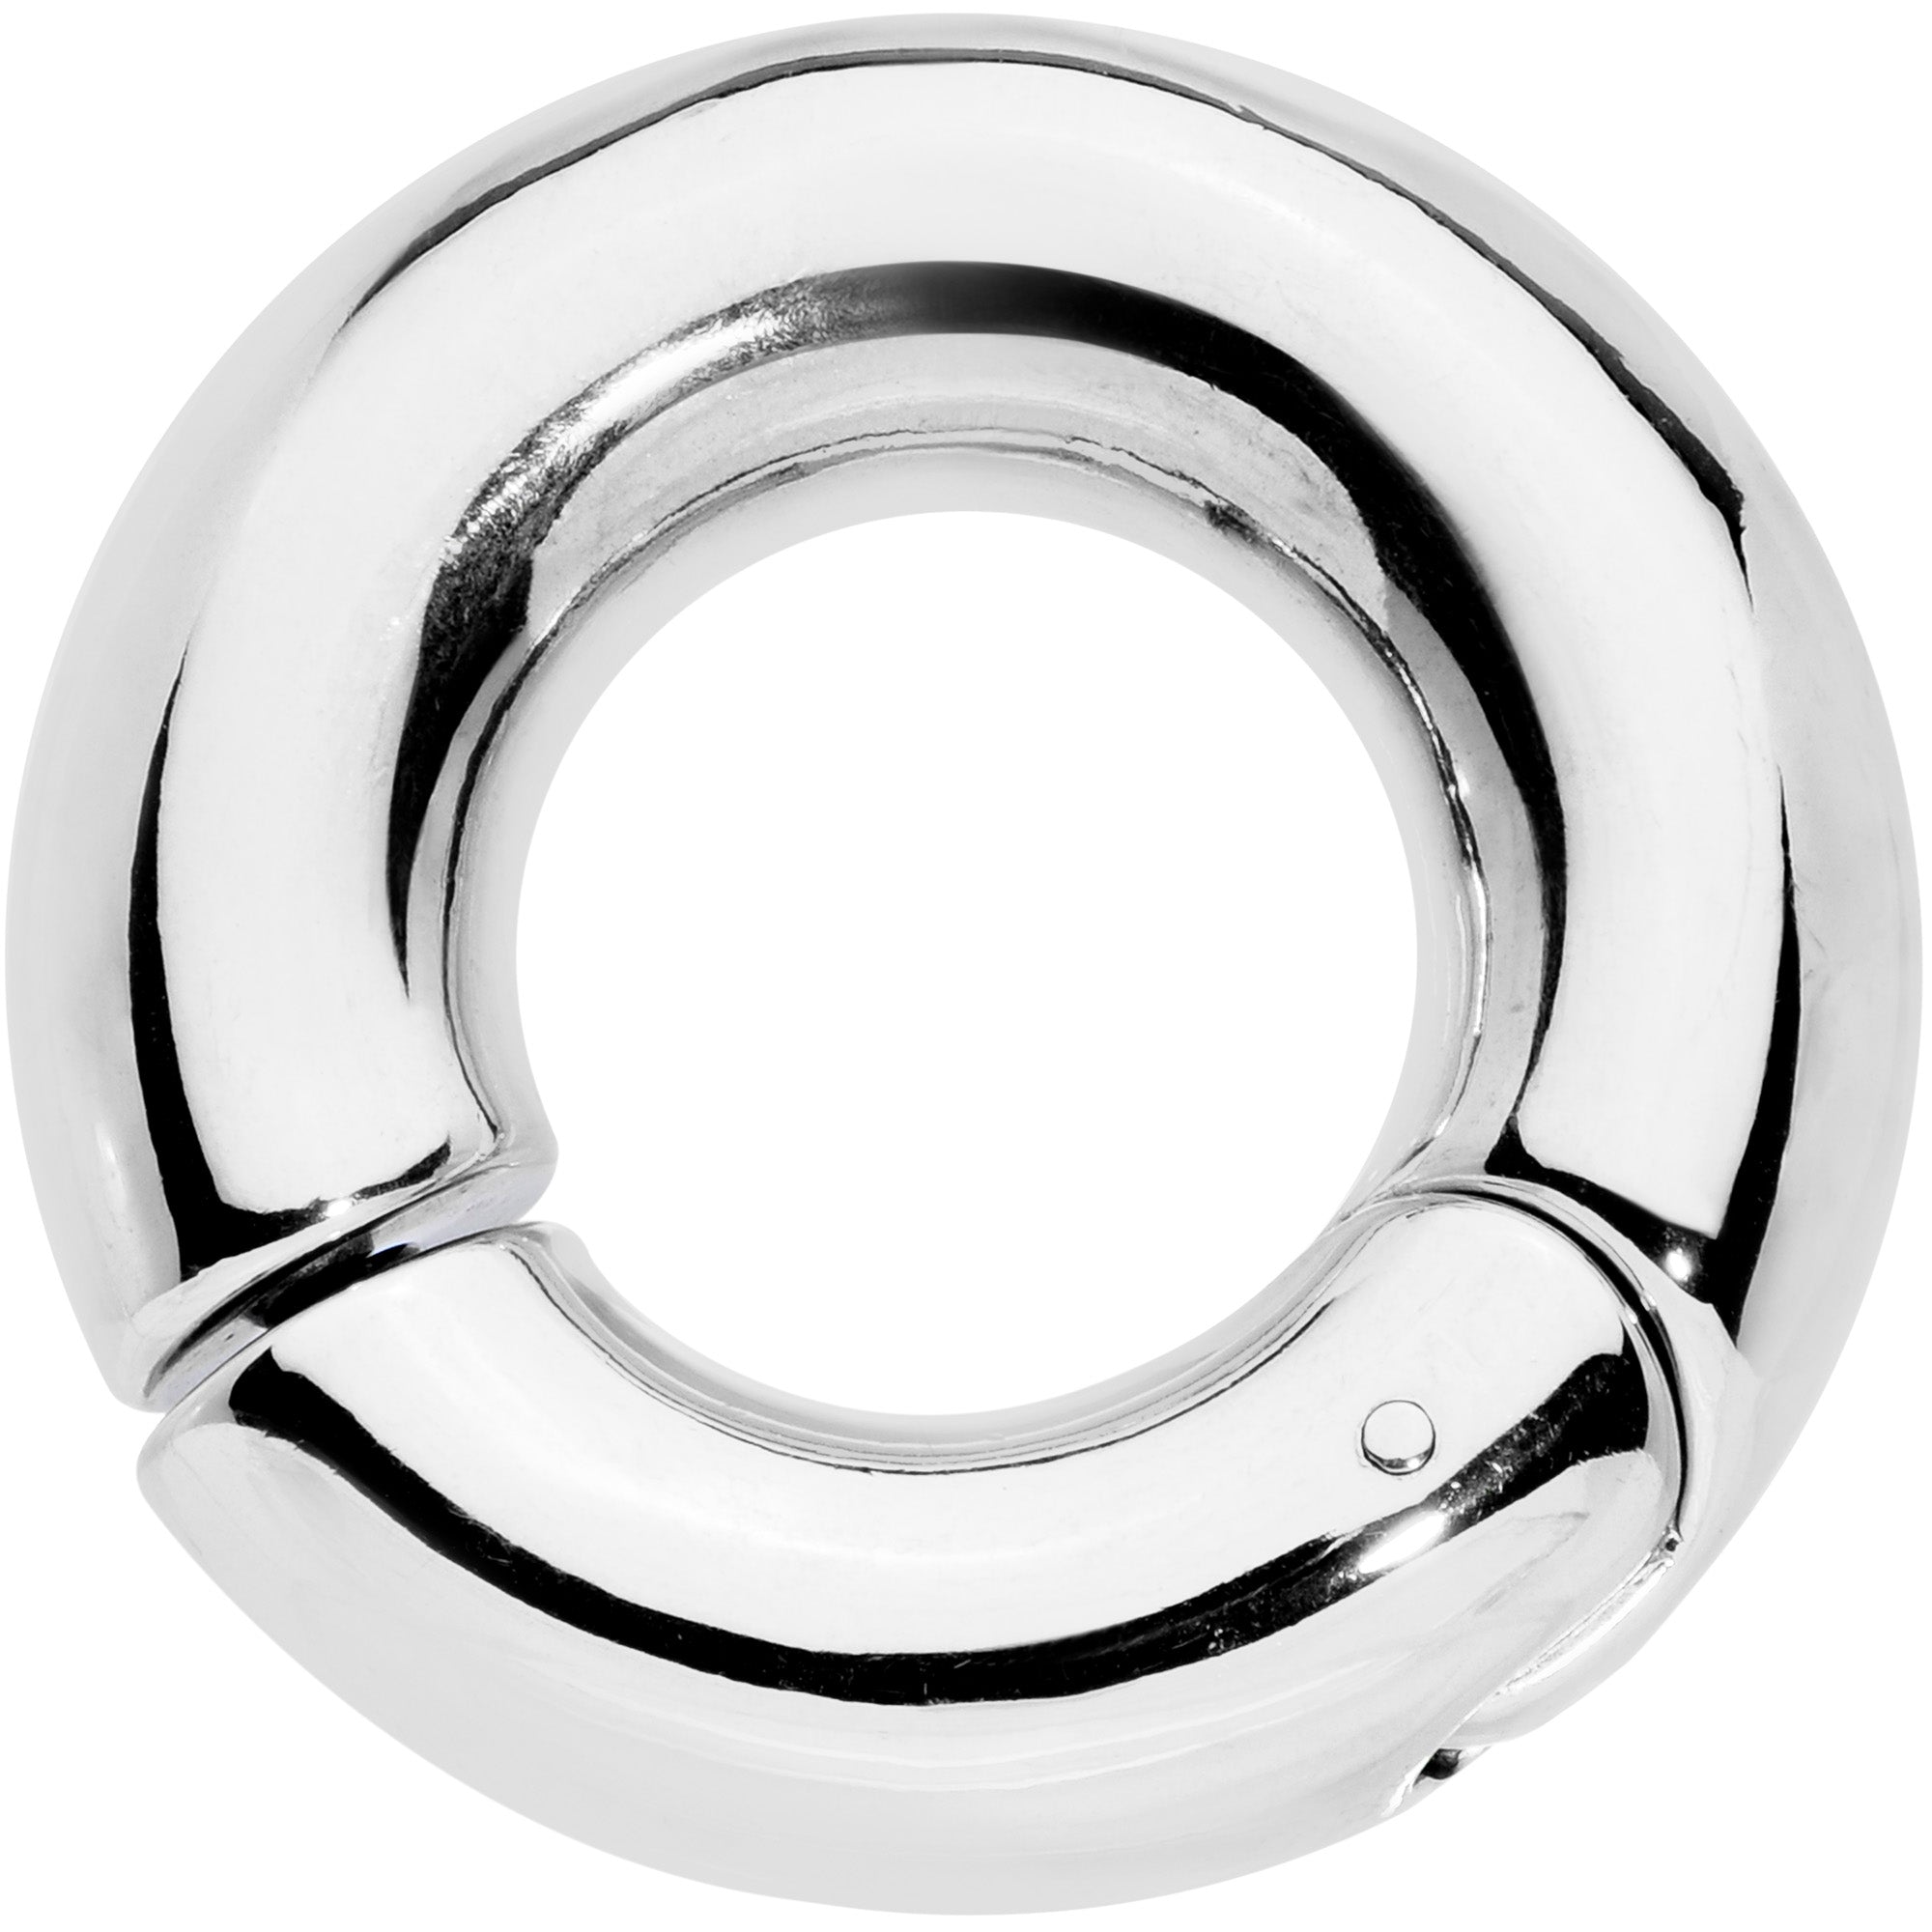 0 Gauge 9/16 Stainless Steel Hinged Segment Ring